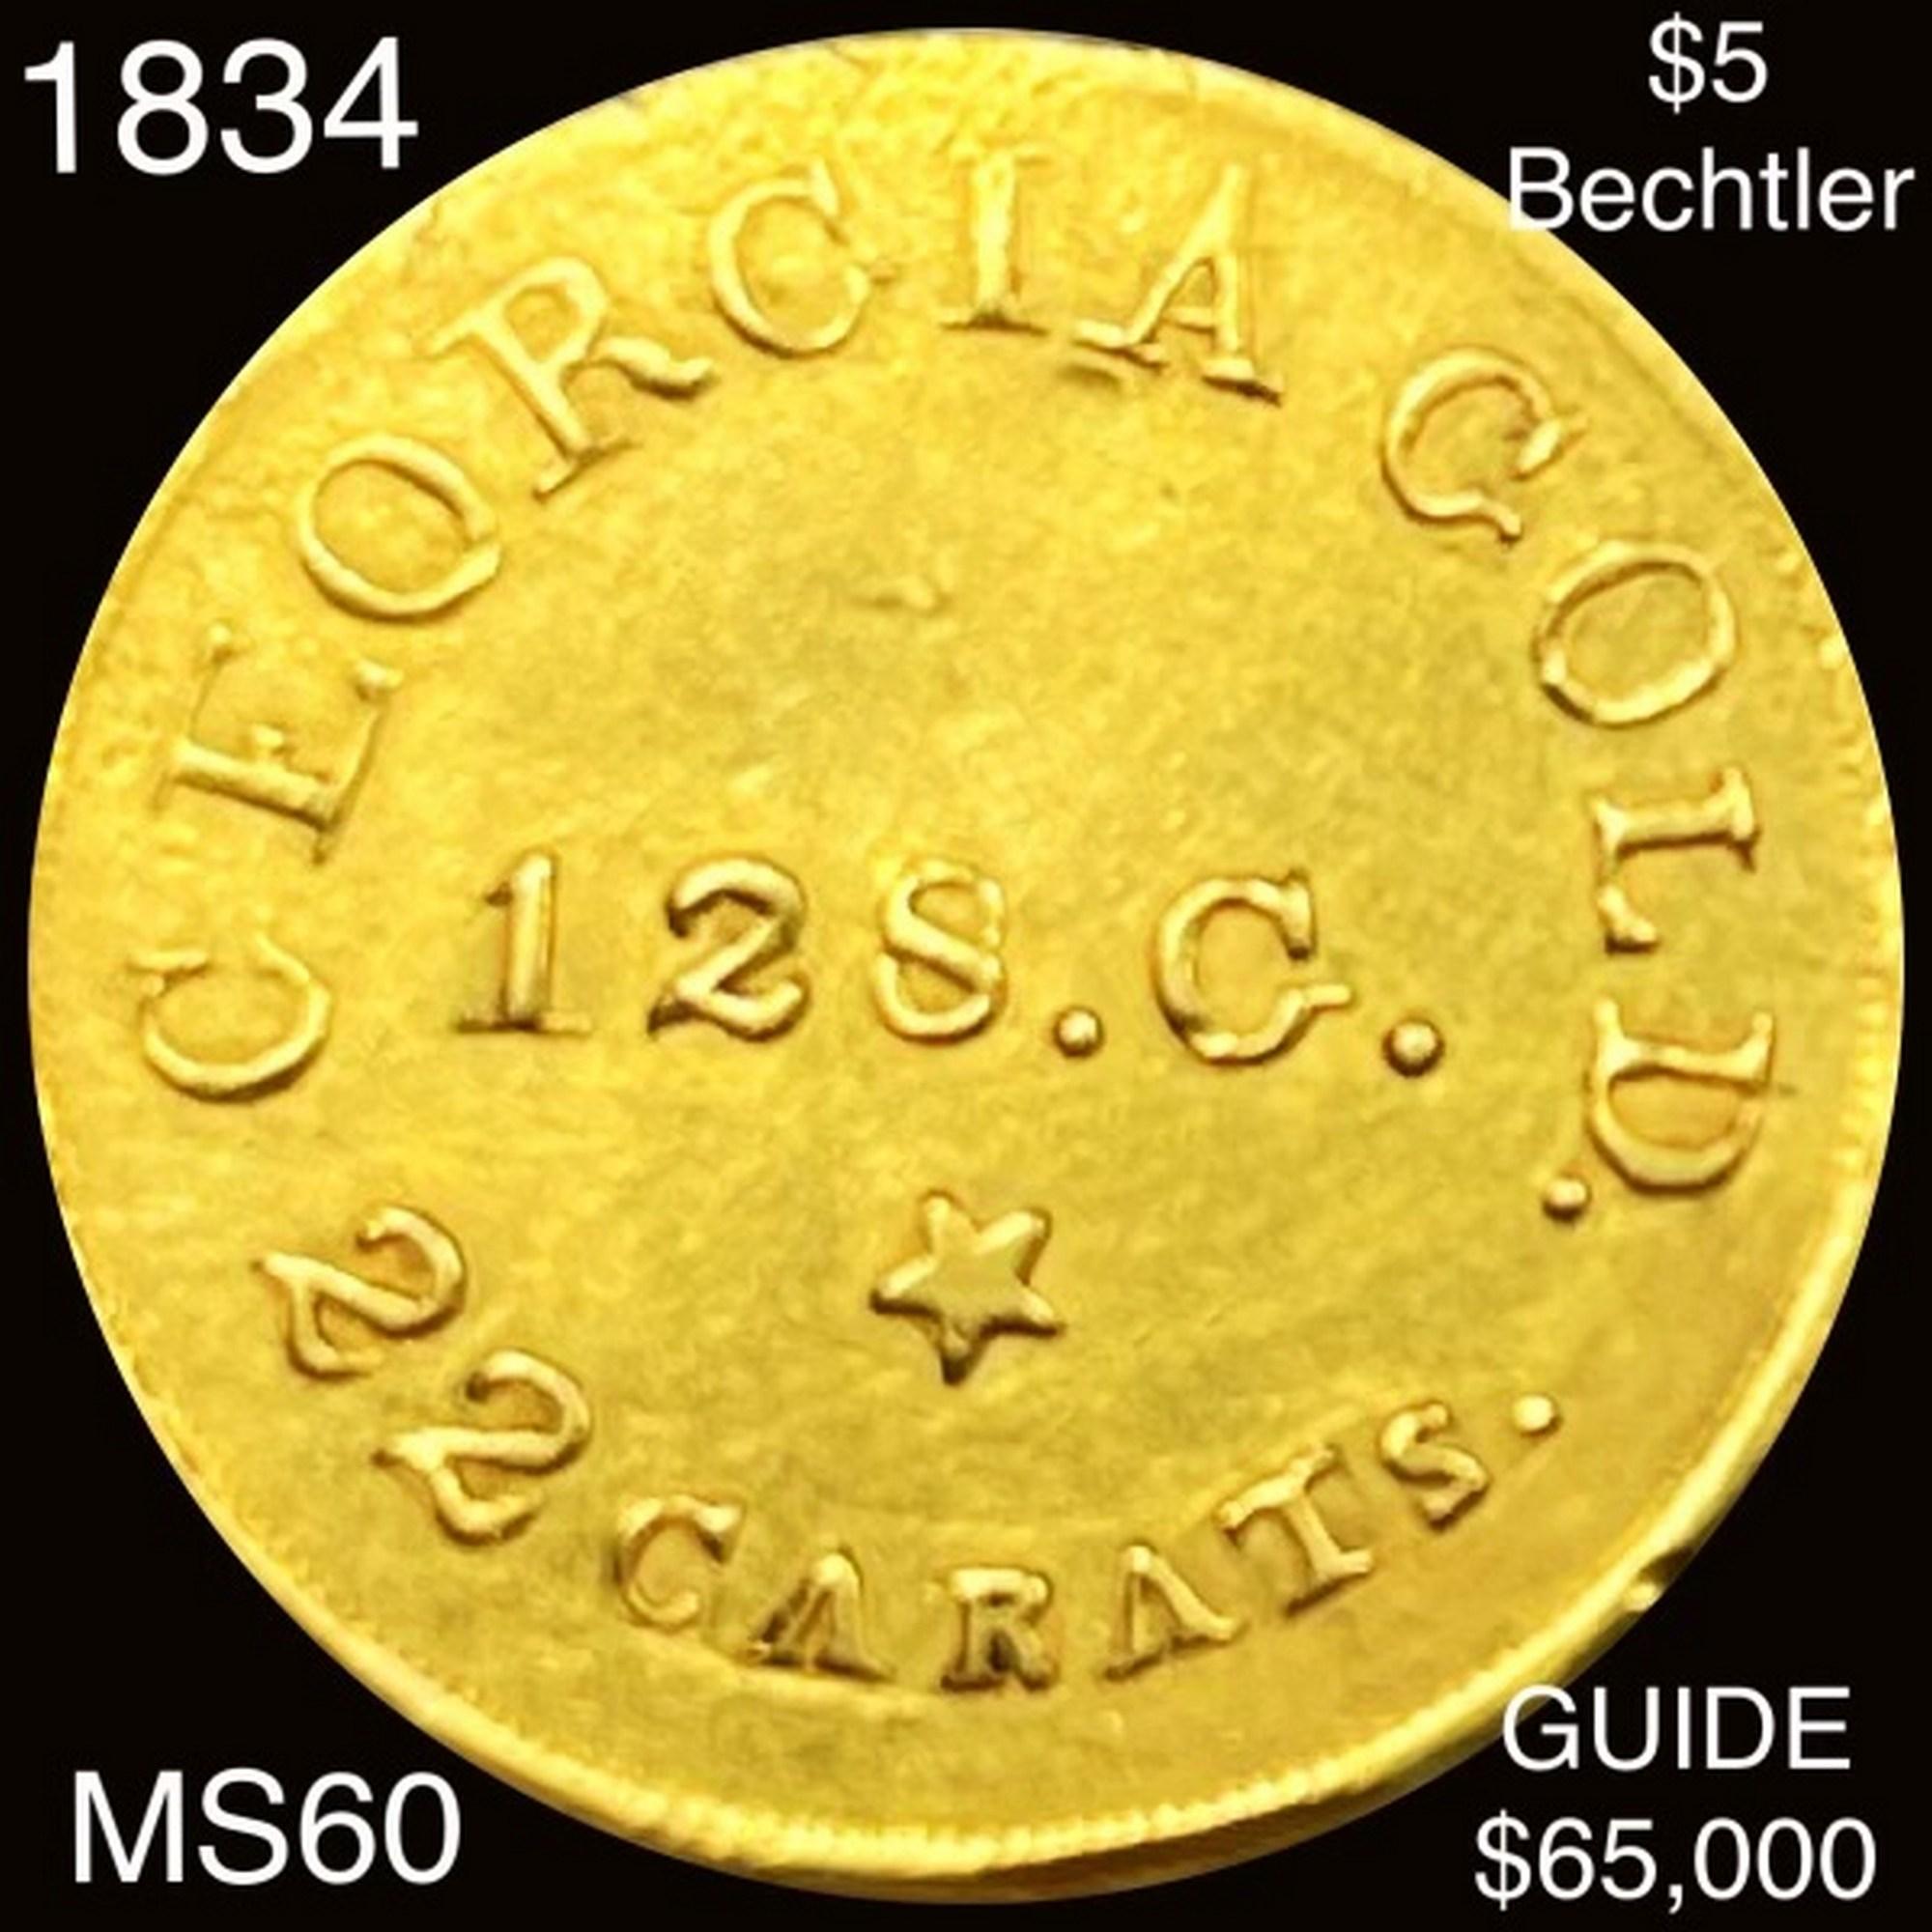 1834 $5 Bechtler Gold Half Eagle UNCIRCULATED